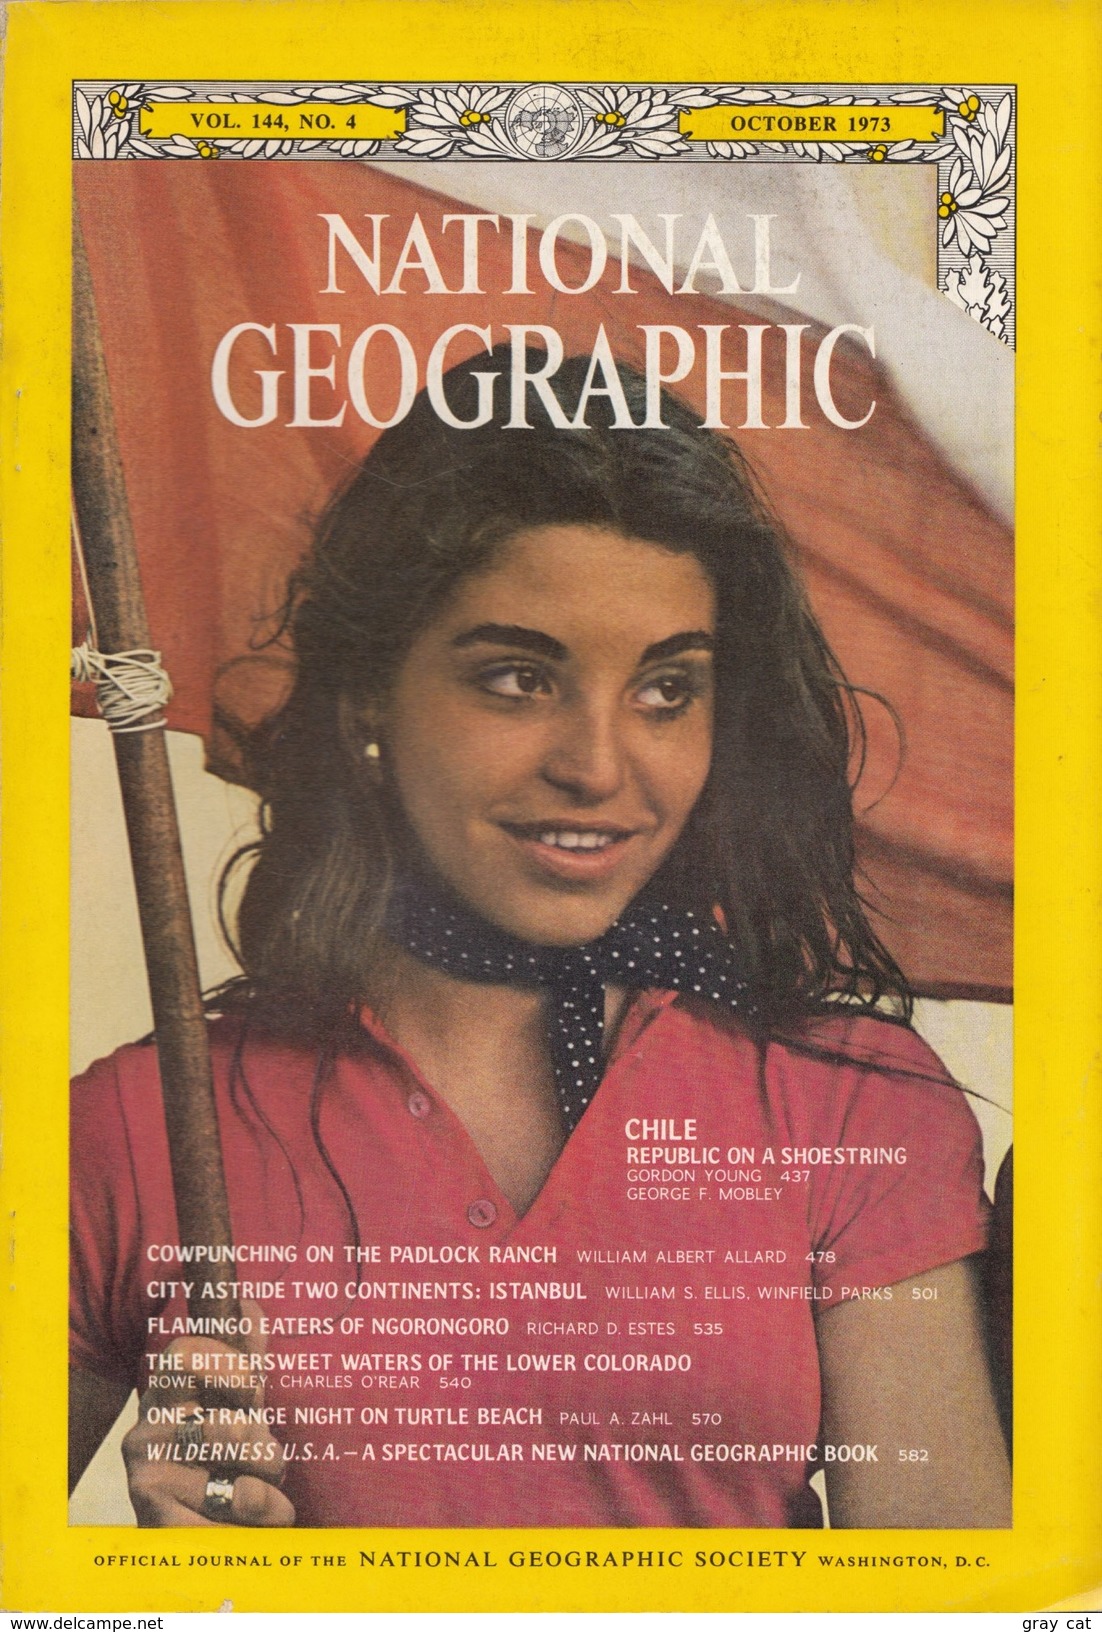 National Geographic Magazine Vol. 144, No. 4, October 1973 - Travel/ Exploration